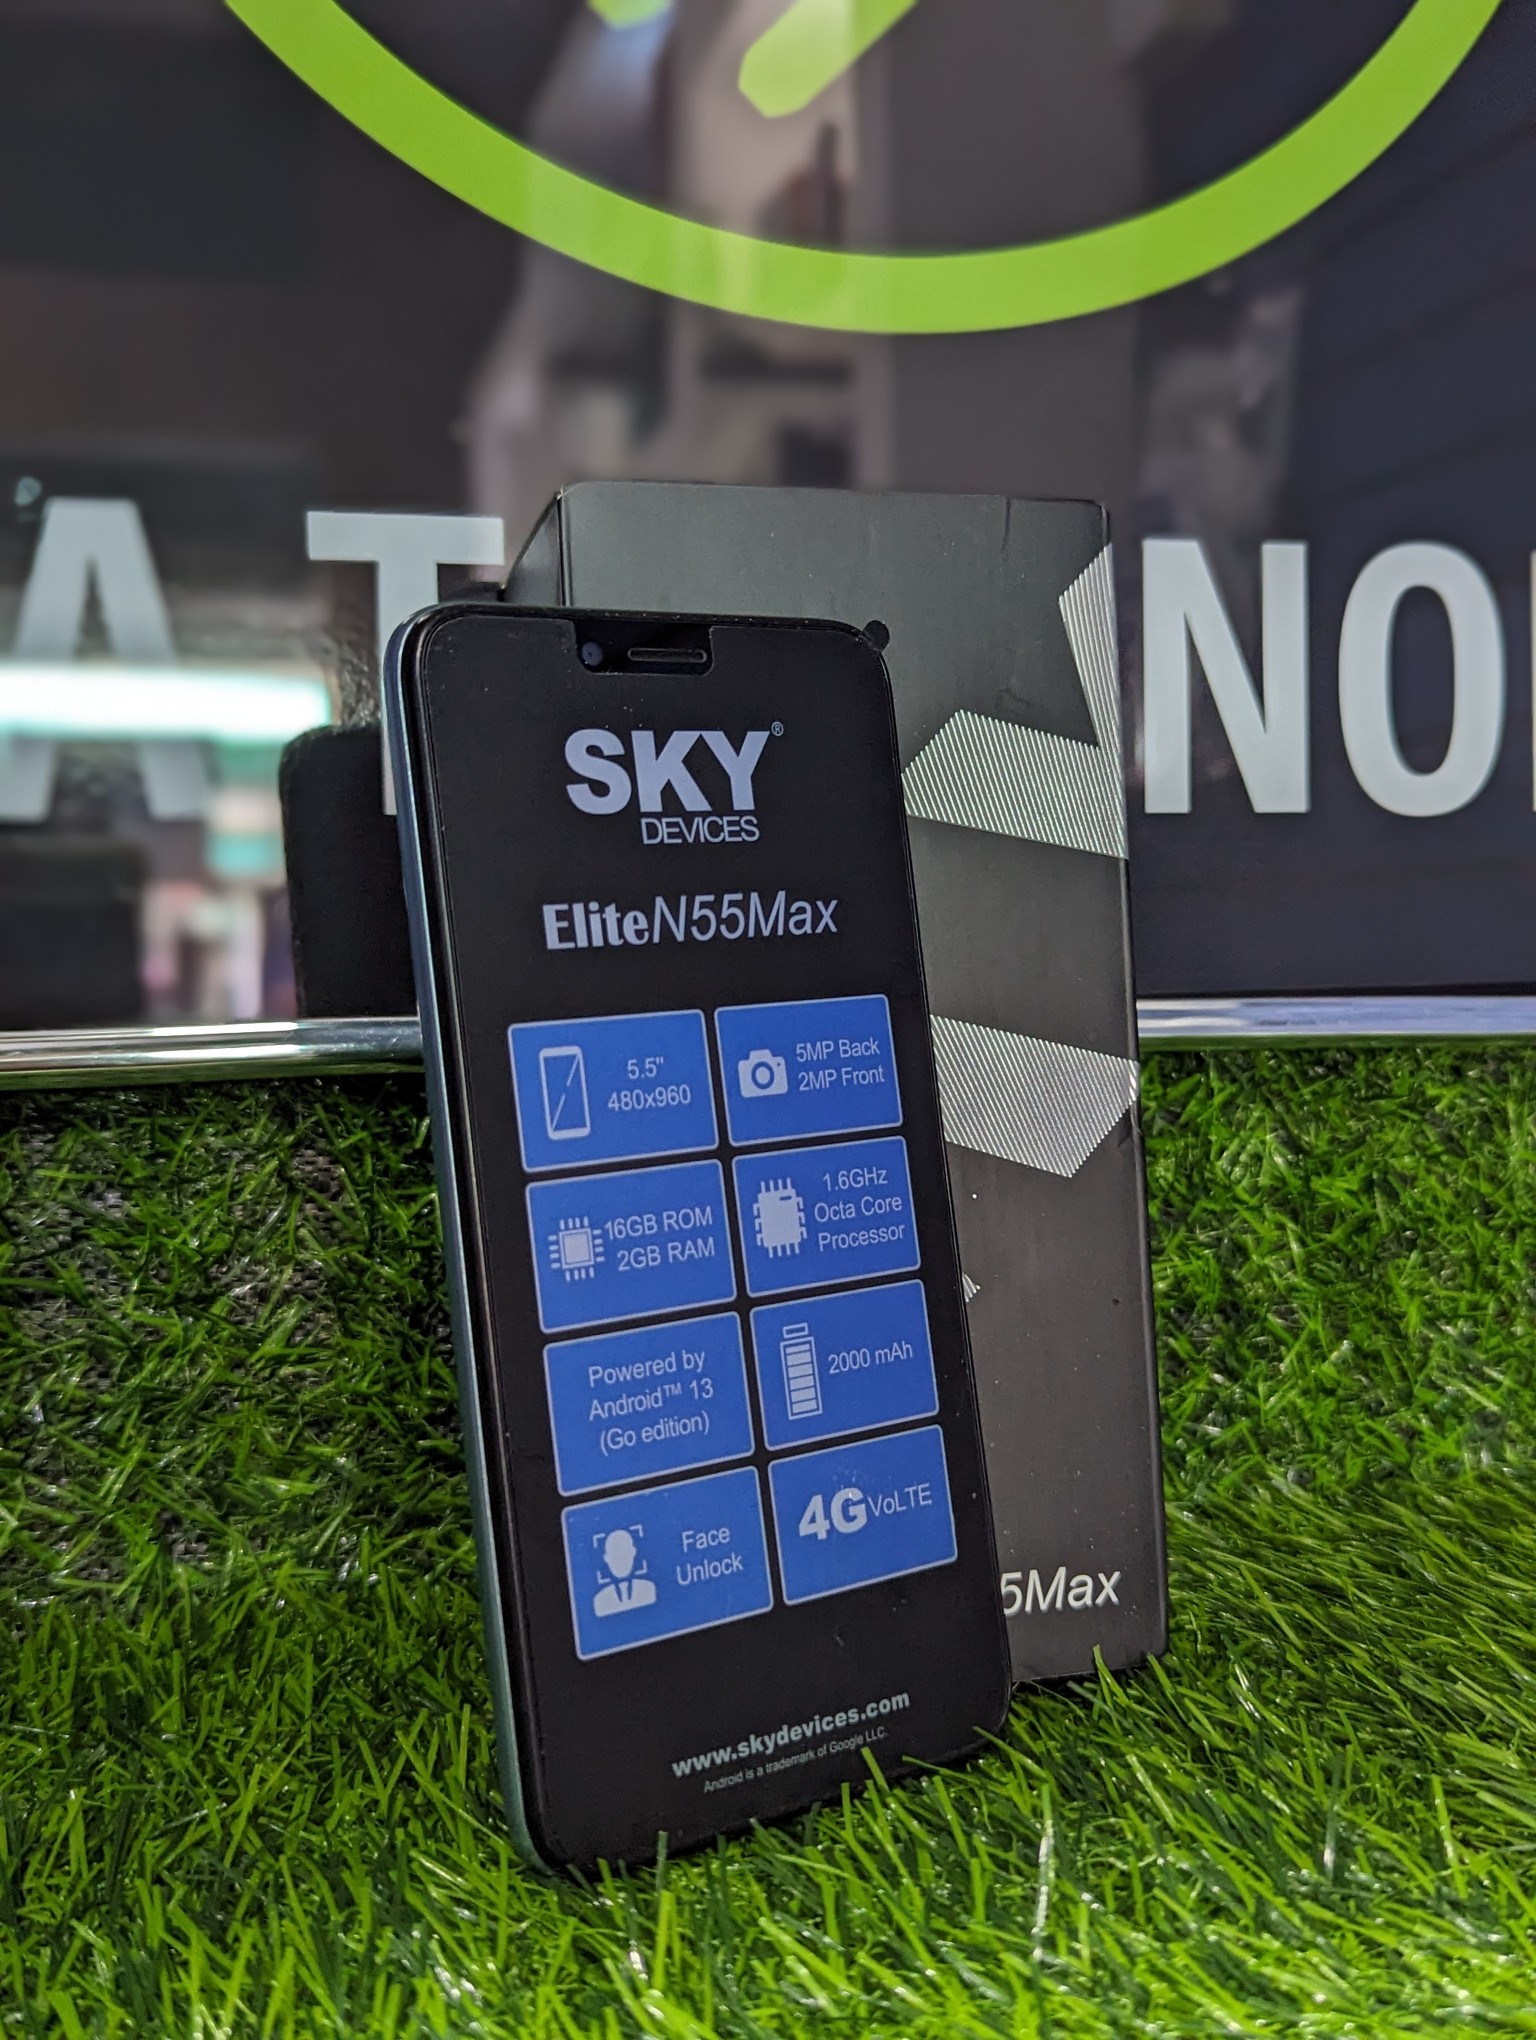 celulares y tabletas - Celulares nuevos Sky  4